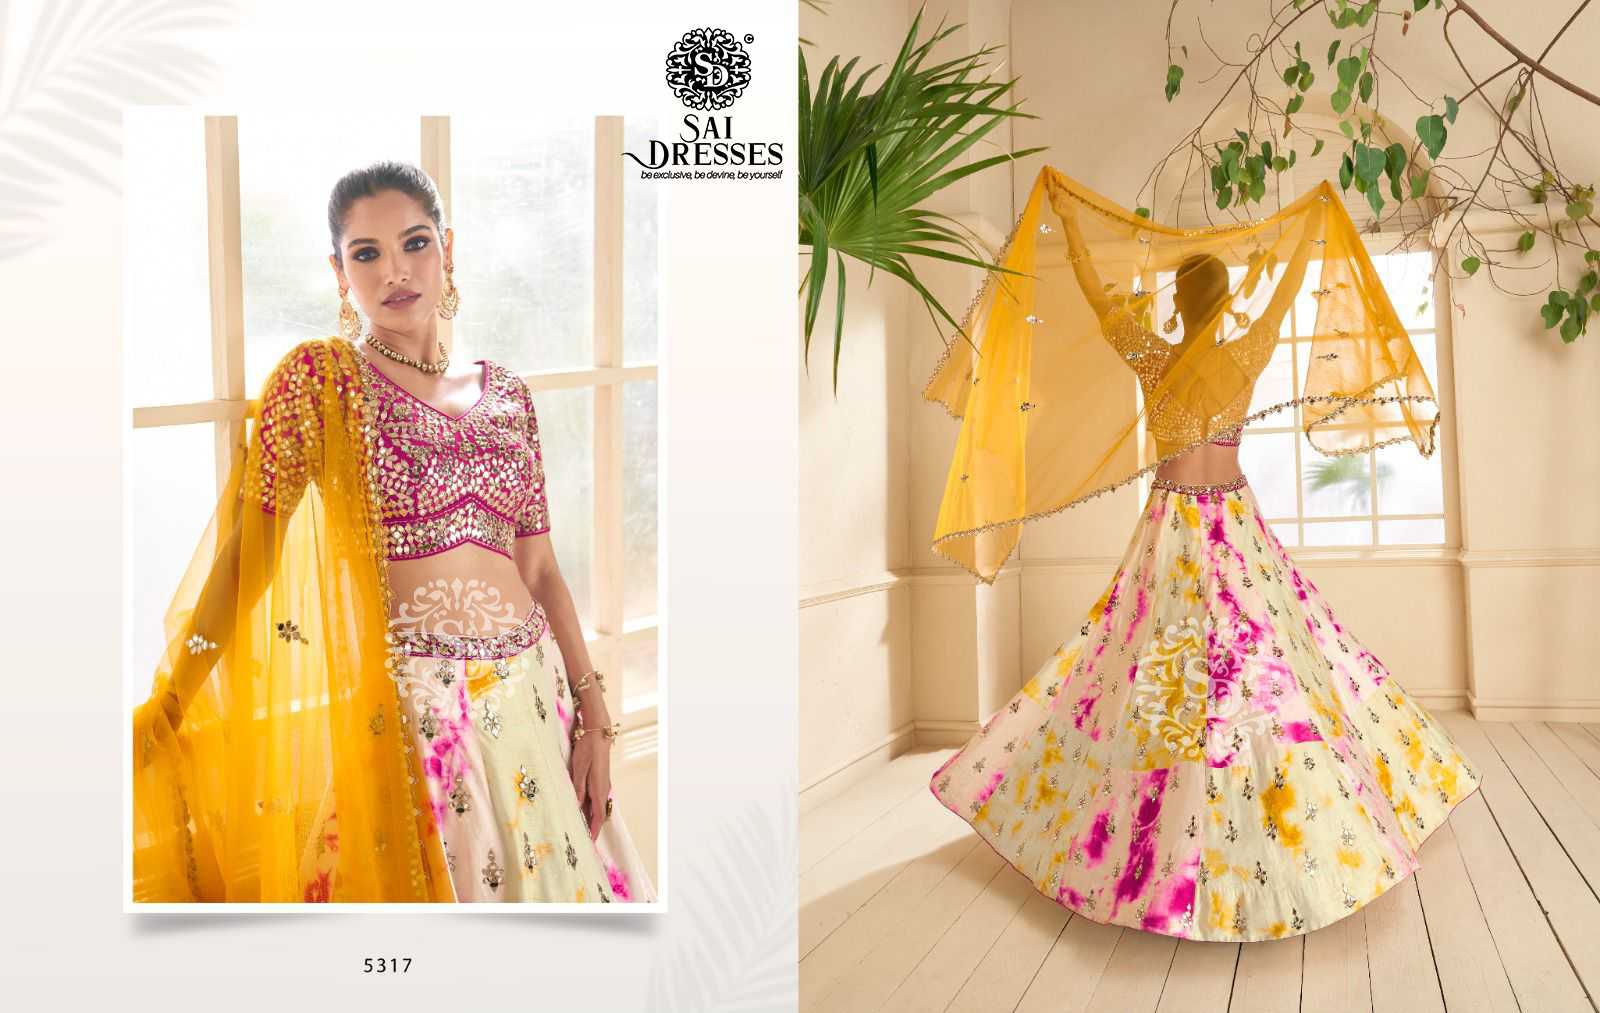 SAI DRESSES PRESENT RANGOLI READYMADE WEDDING WEAR CLASSY DESIGNER COLLECTION IN WHOLESALE RATE IN SURAT